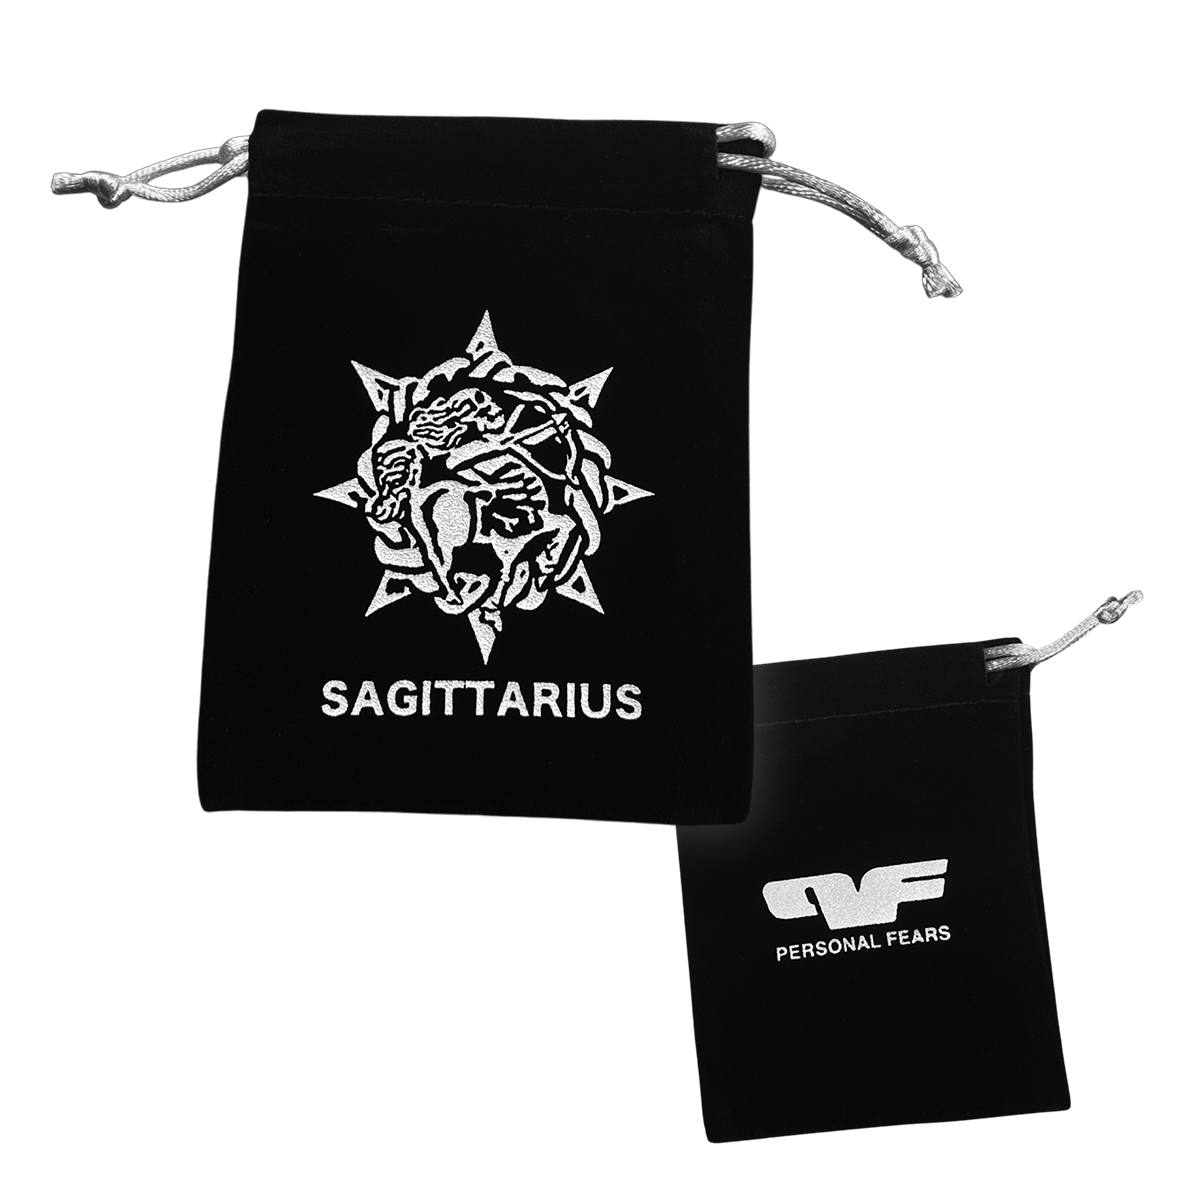 Sagittarius Necklace Pendant - Bag - Personal Fears